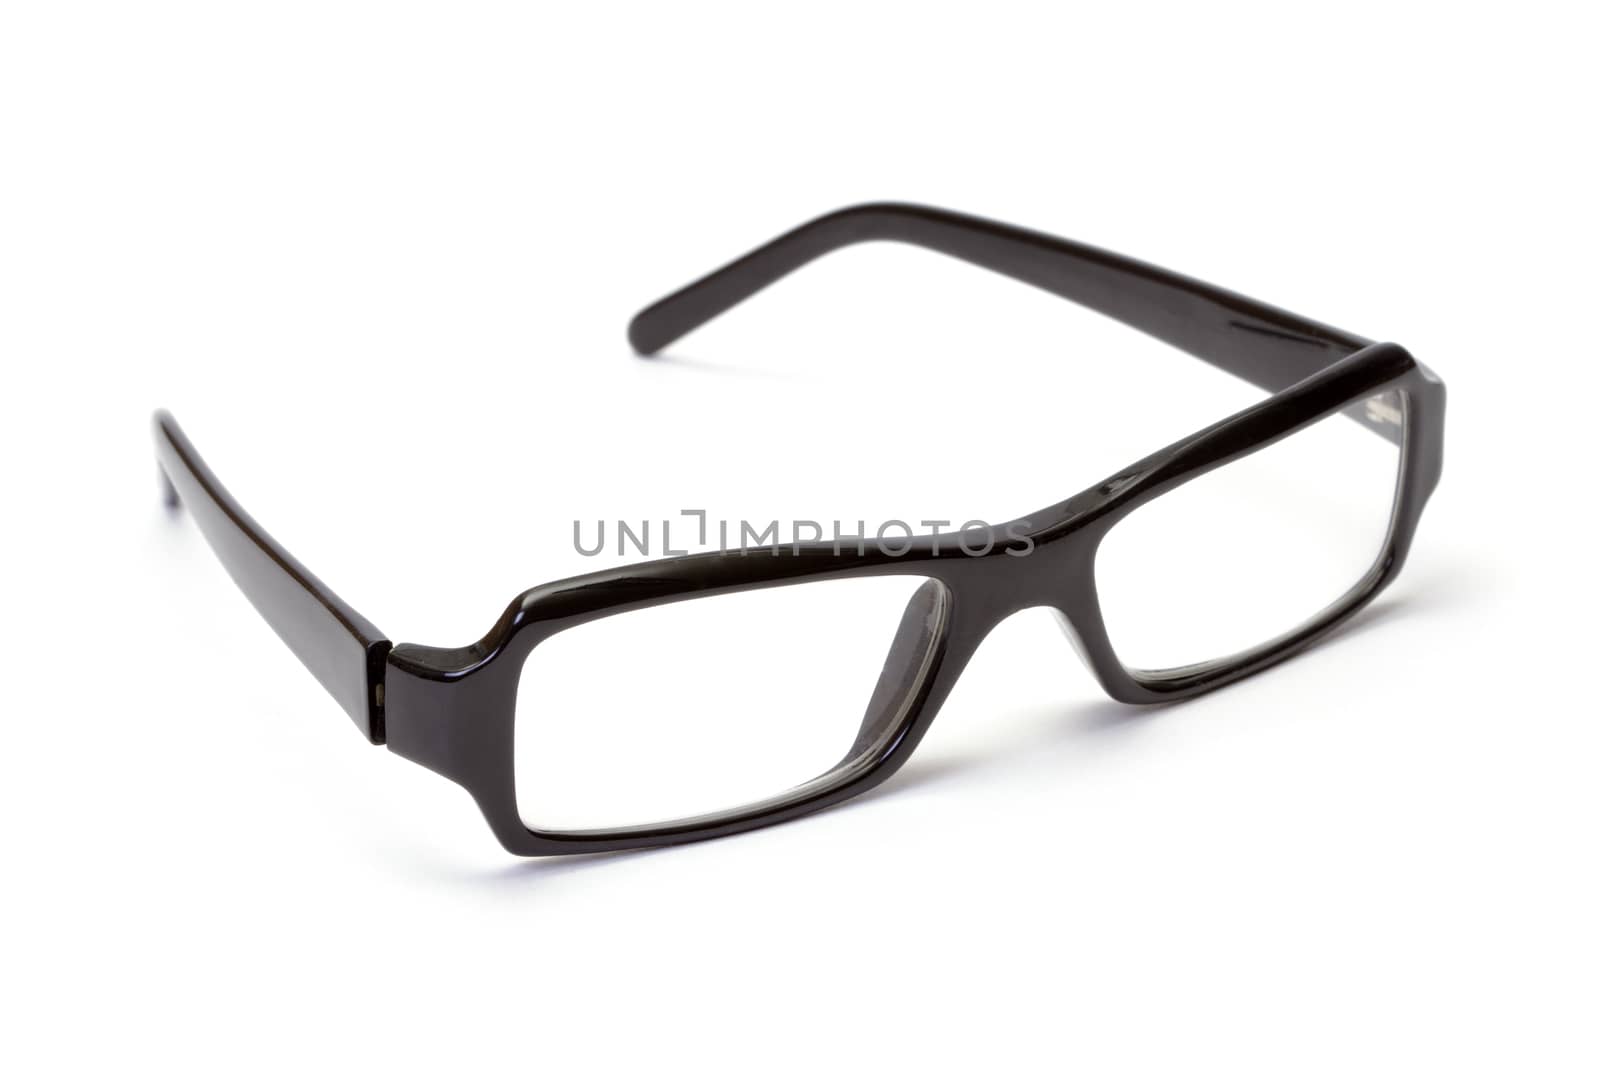 Black plastic glasses by marslander